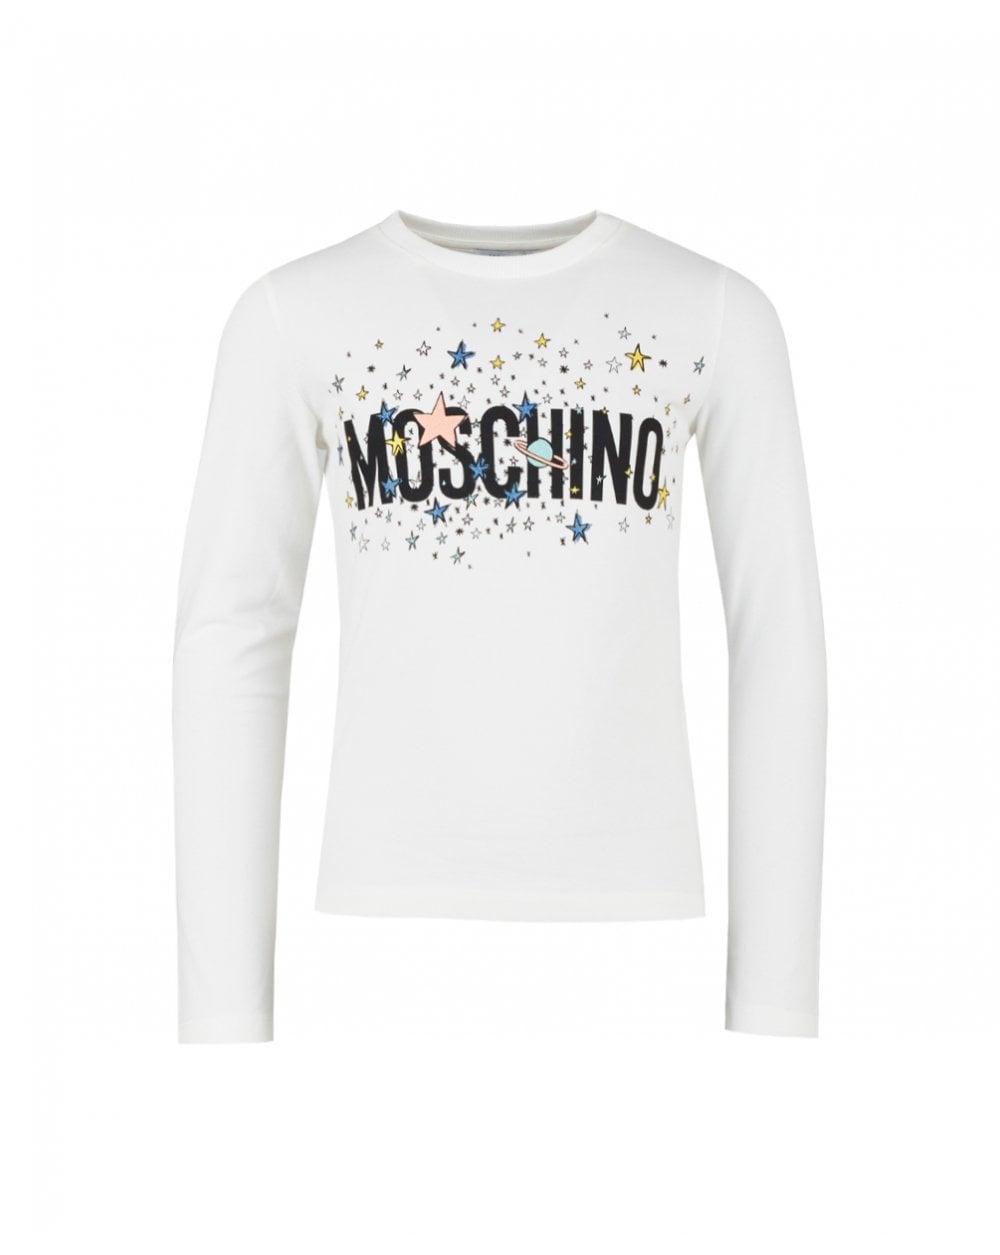 Star Shirt Company Logo - Moschino Star Logo Long Sleeved T Shirt From Psyche UK